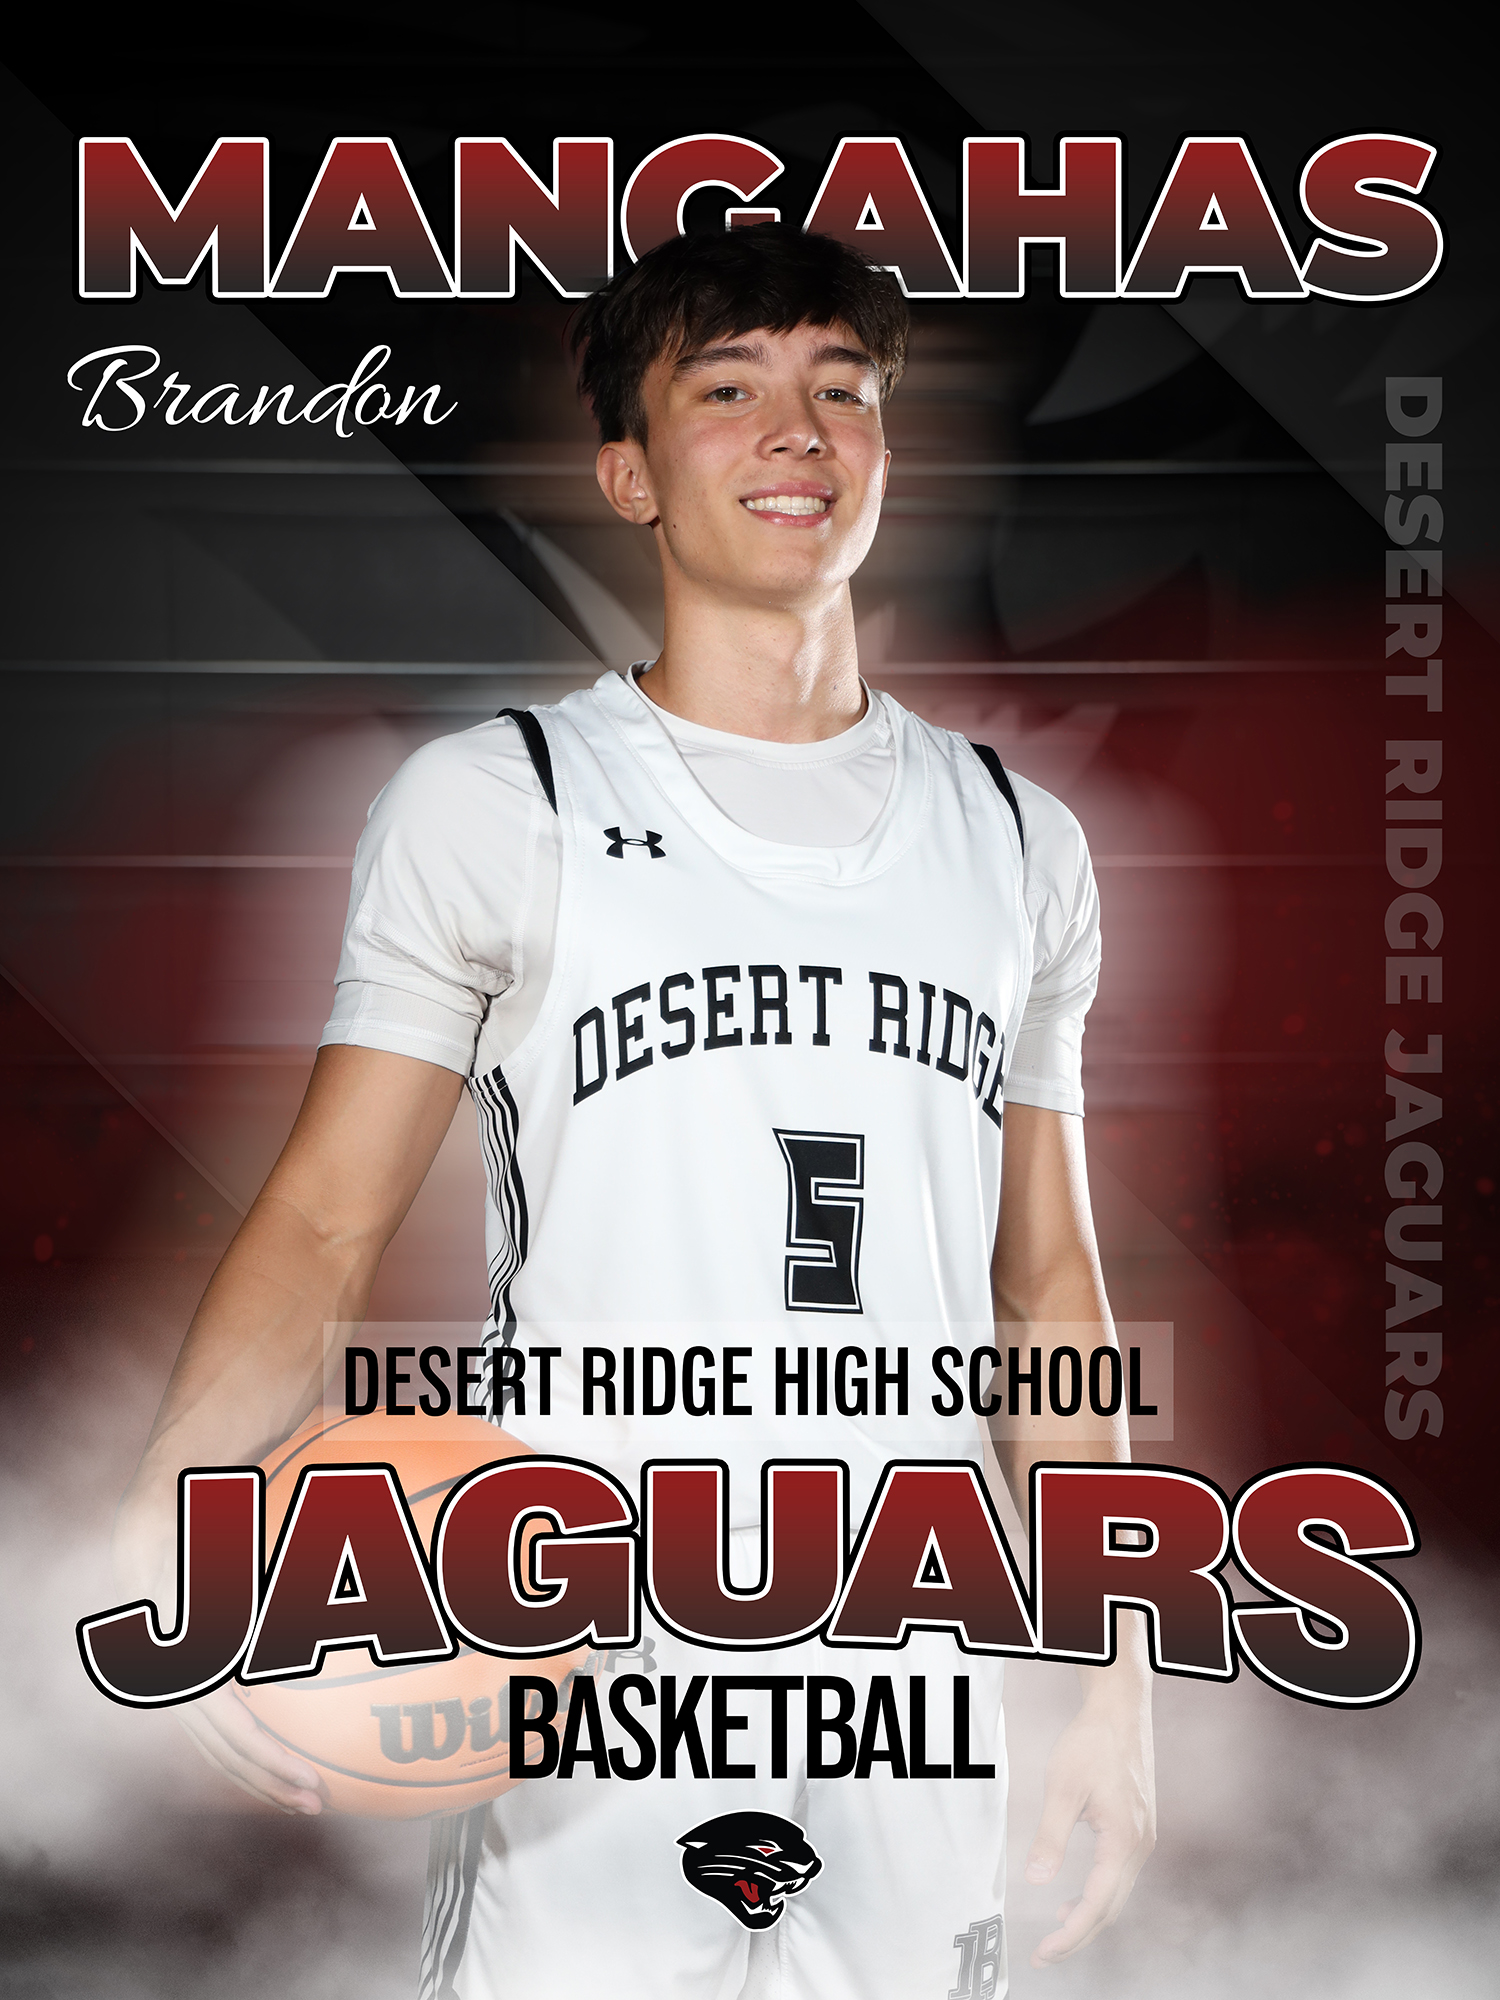 Desert Ridge Jaguars Basketball player Brandon Mangahas